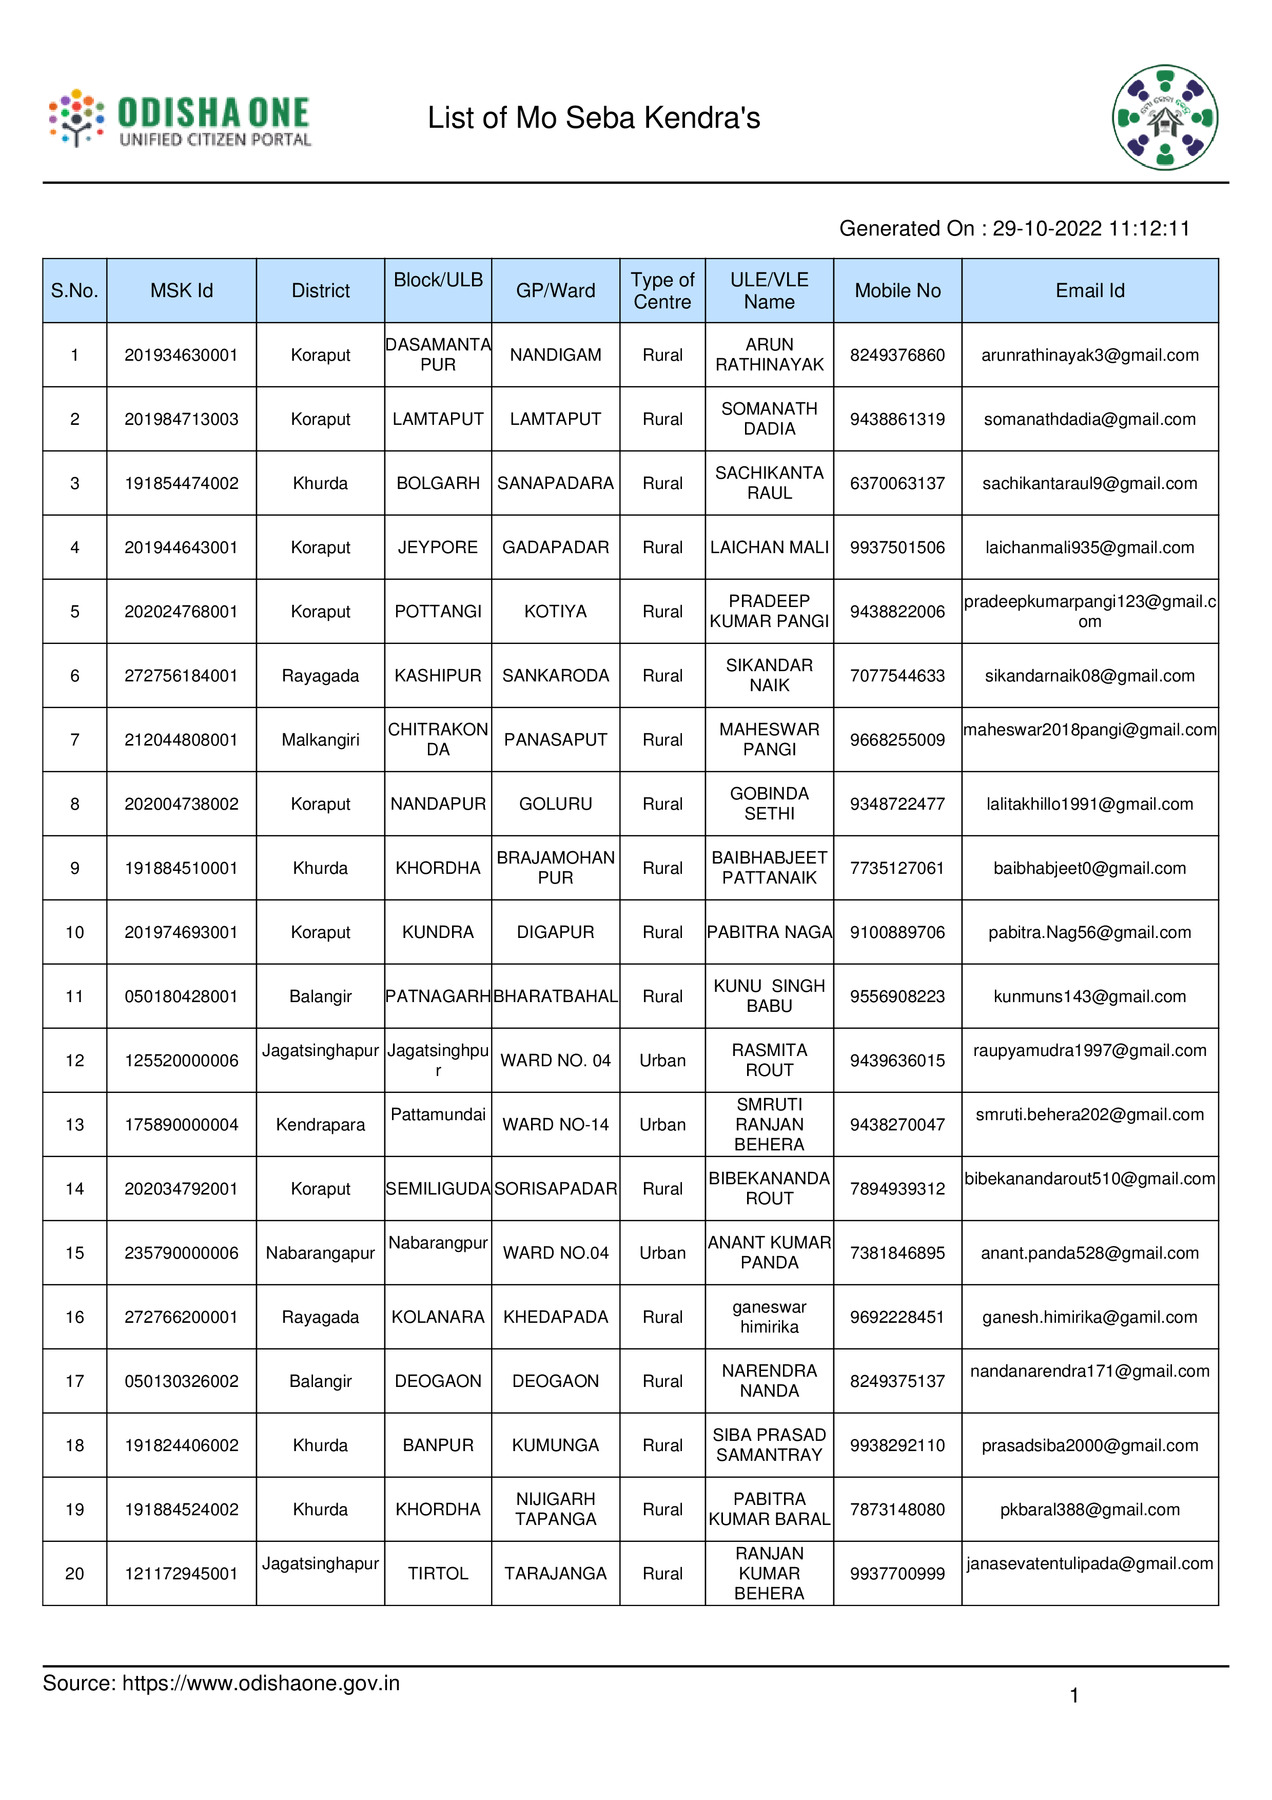 Odisha Mo Seva Kendra (MSK) List 2023 PDF